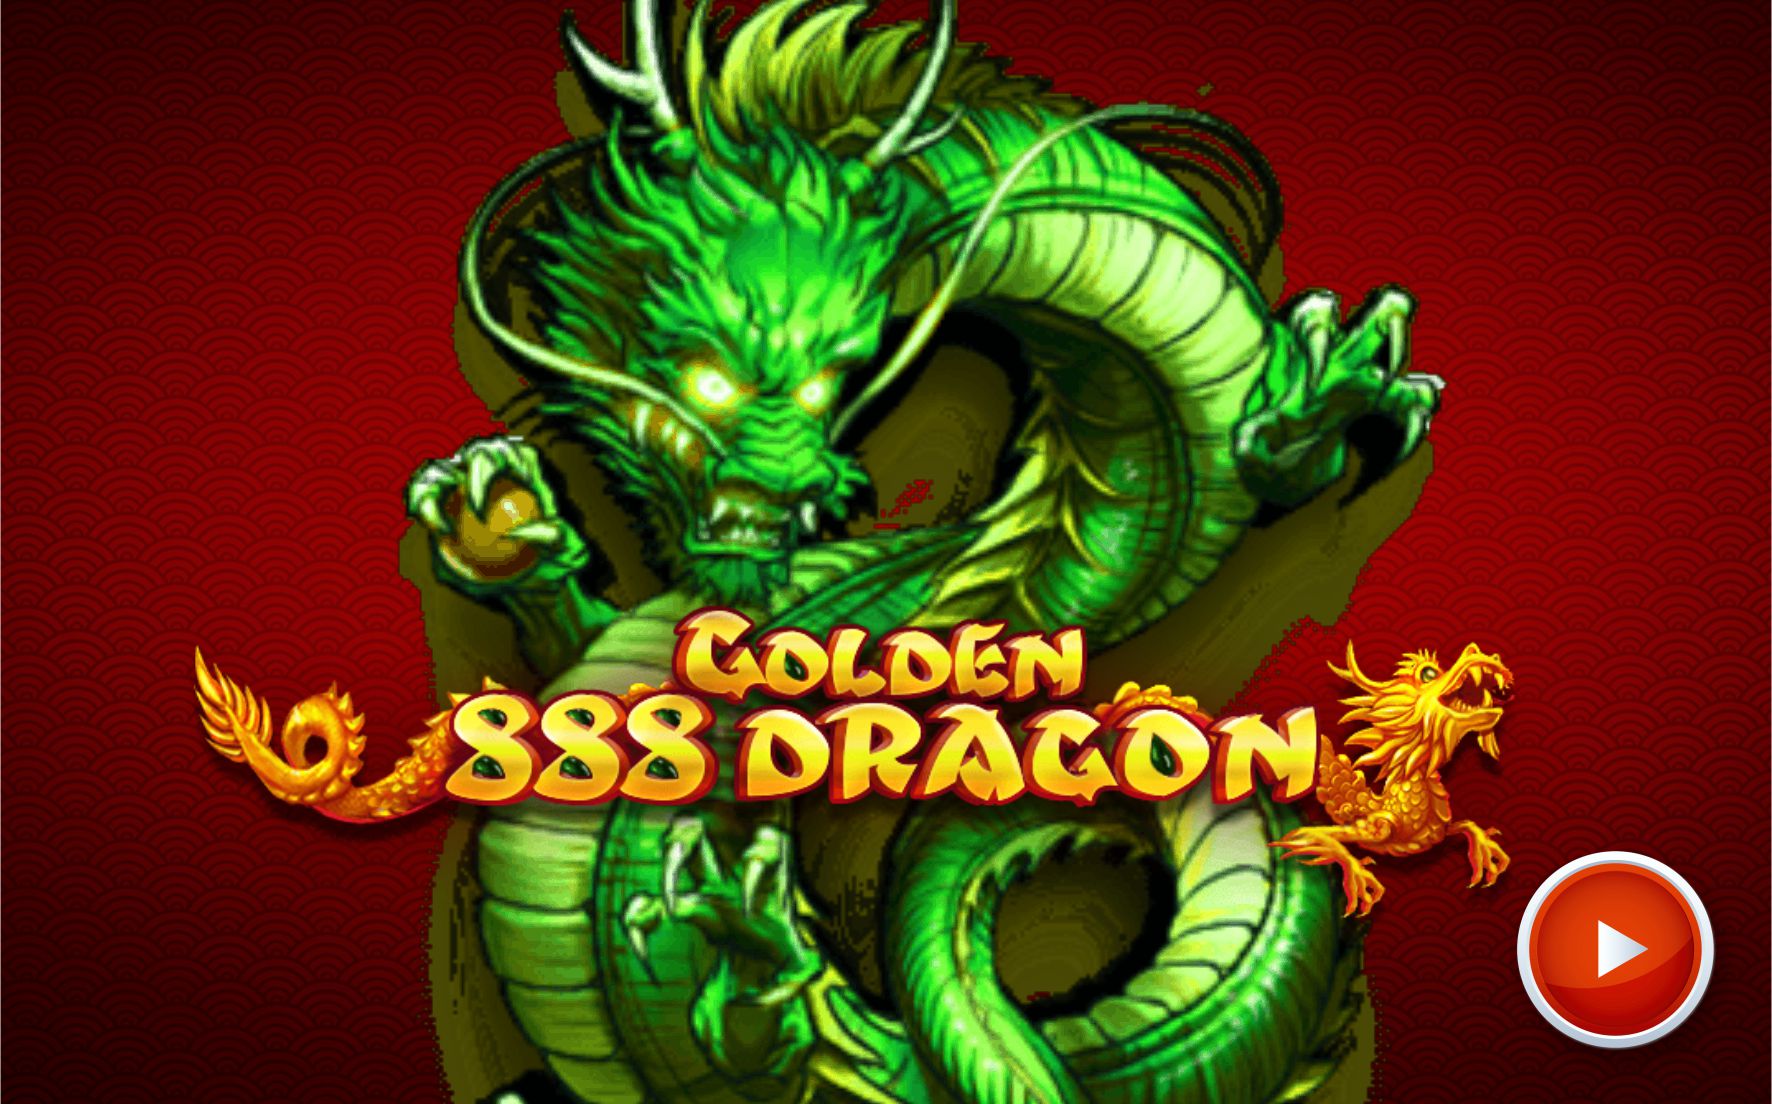 888 golden dragons